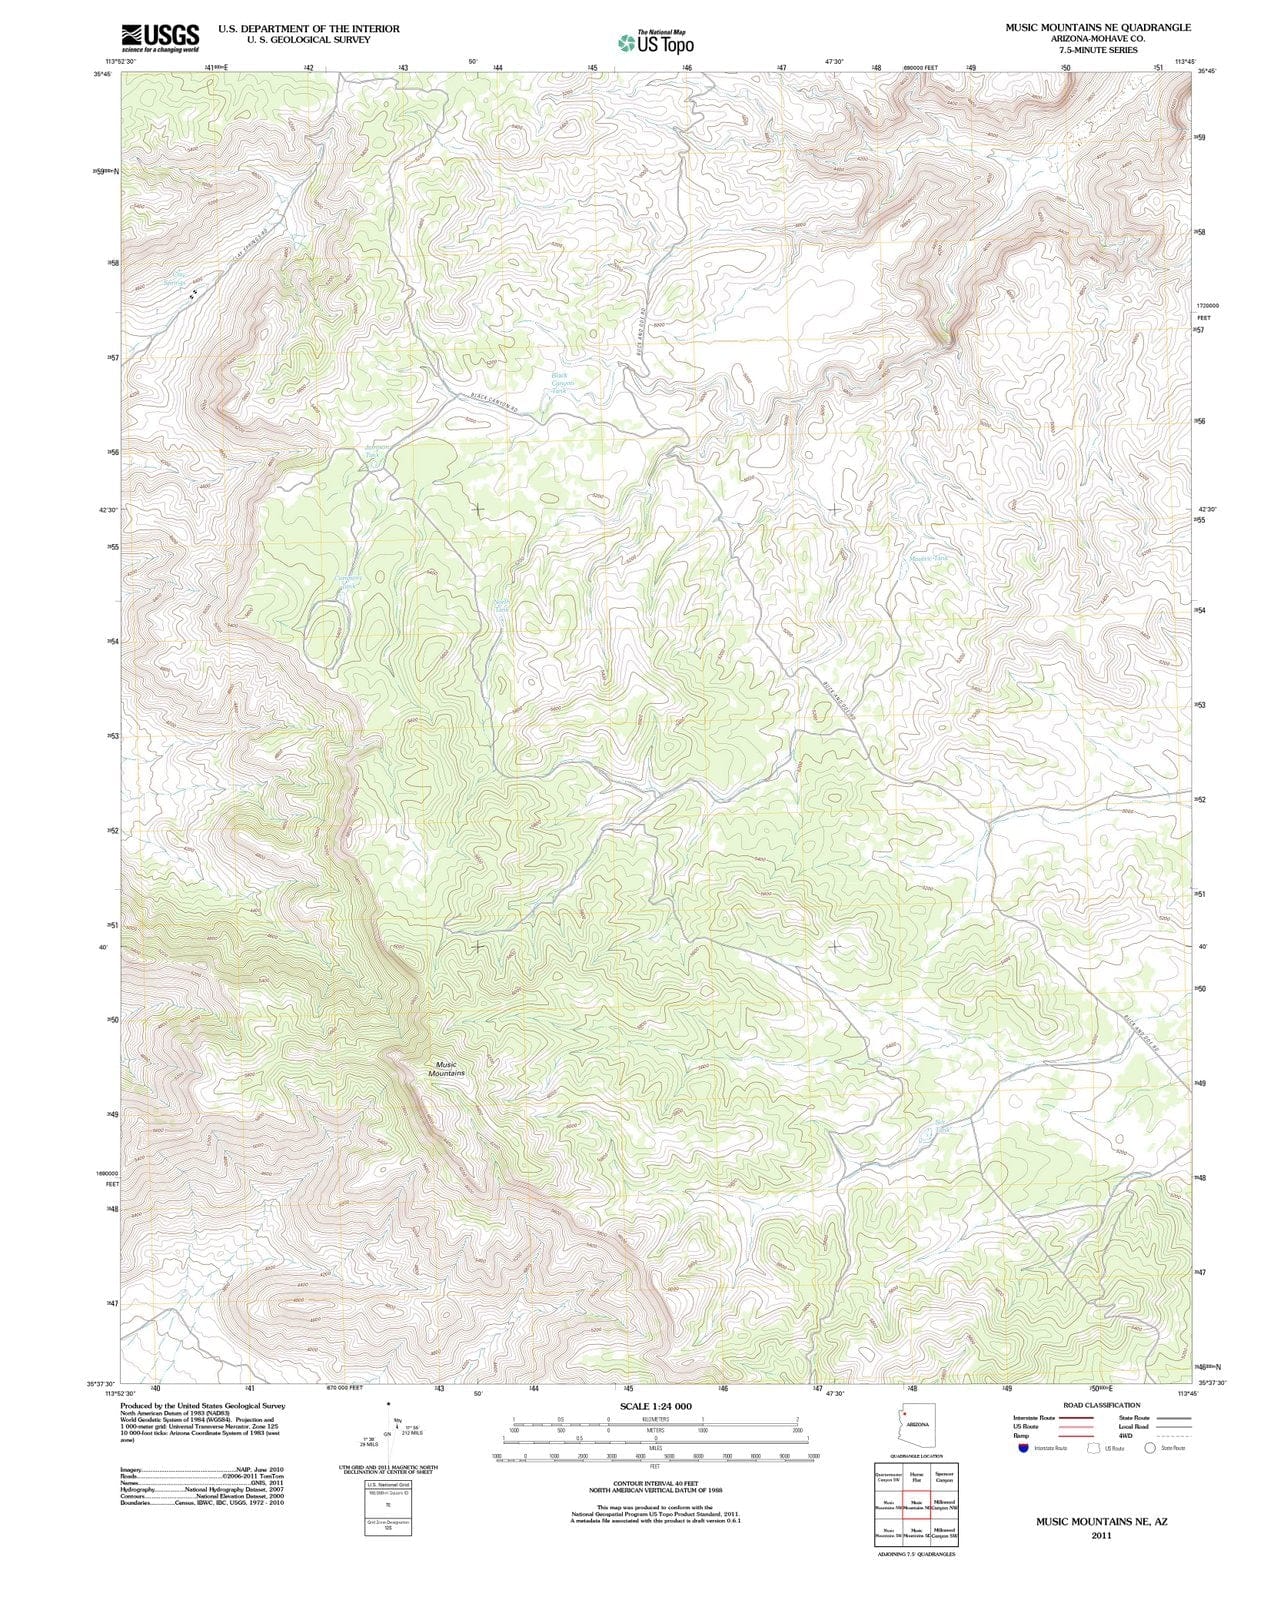 2011 Music Mountains, AZ - Arizona - USGS Topographic Map